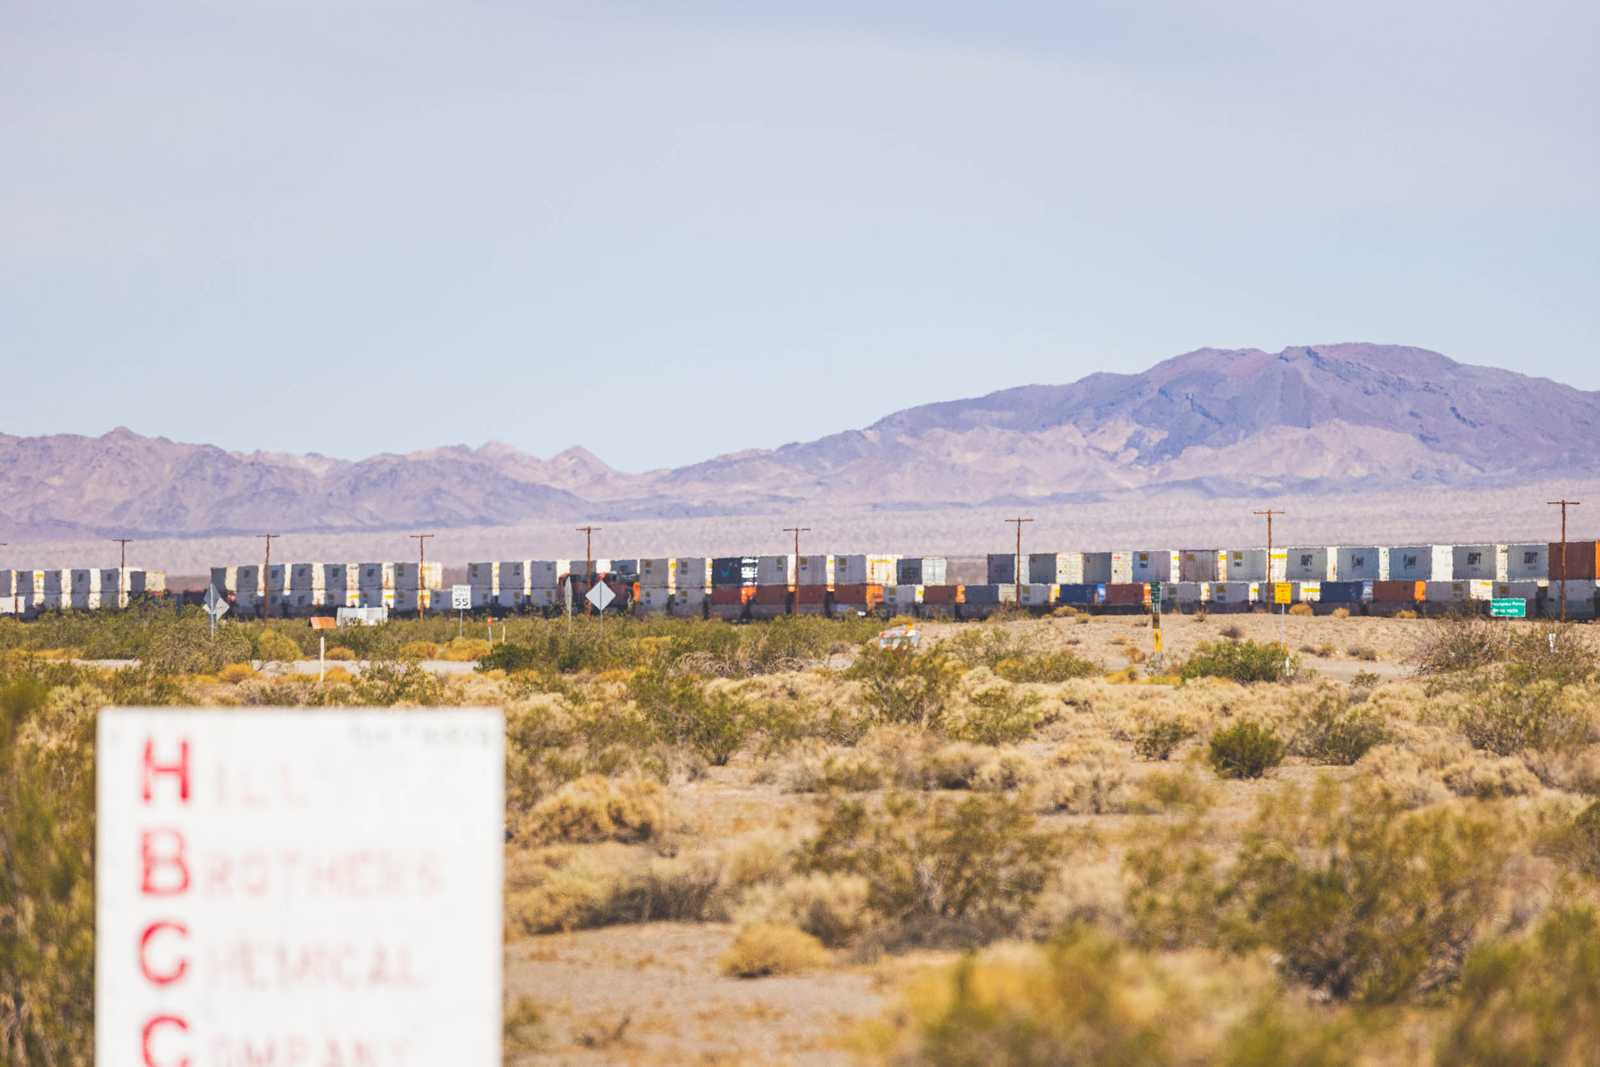 A long train passes in the desert